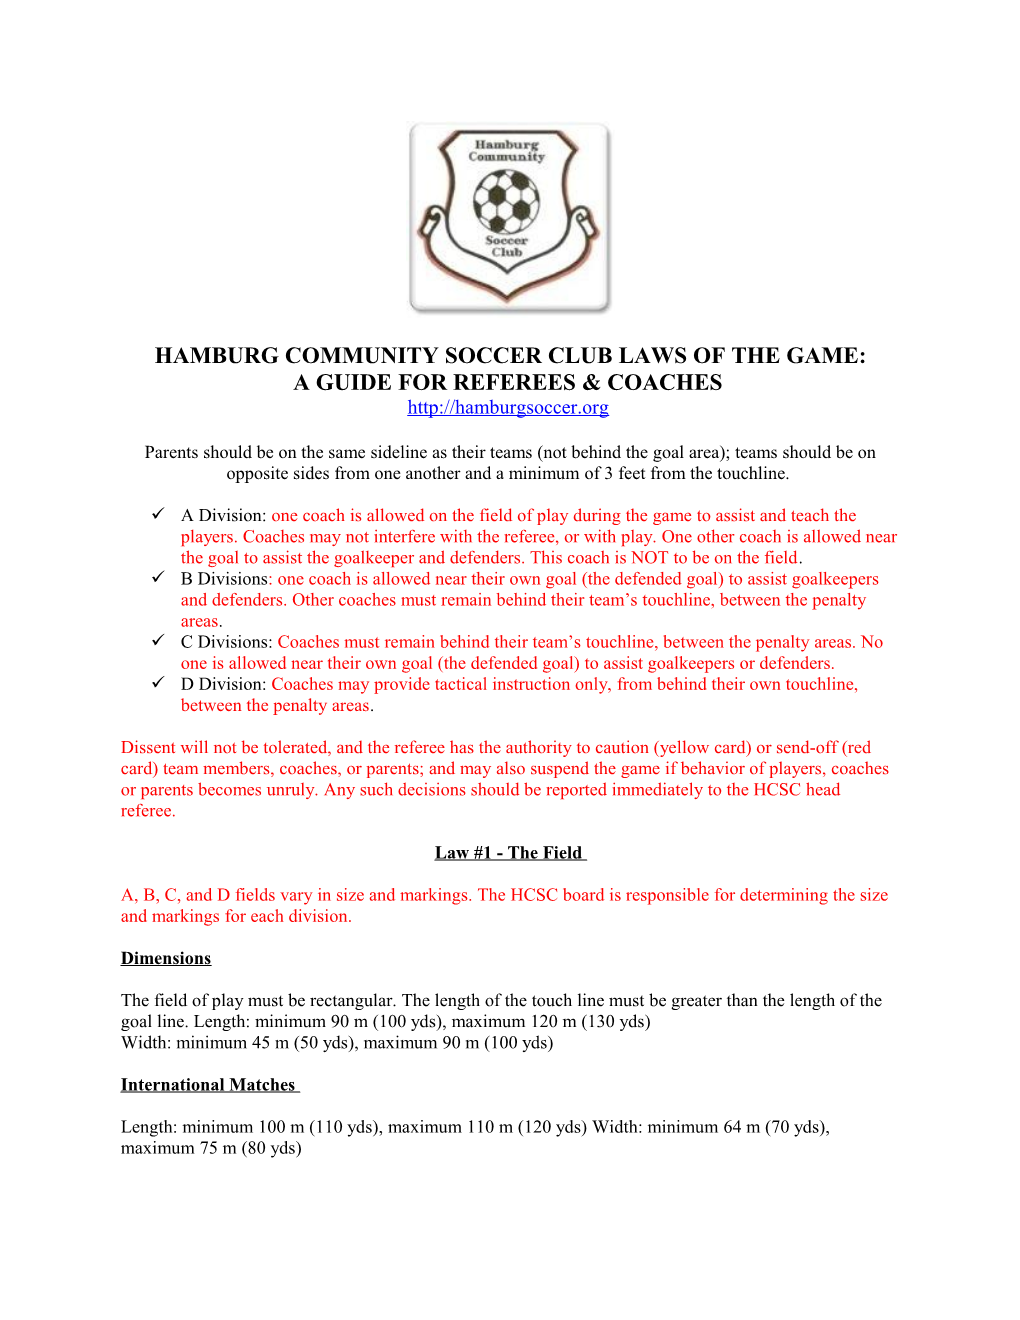 Hamburg Community Soccer Club Laws of the Game